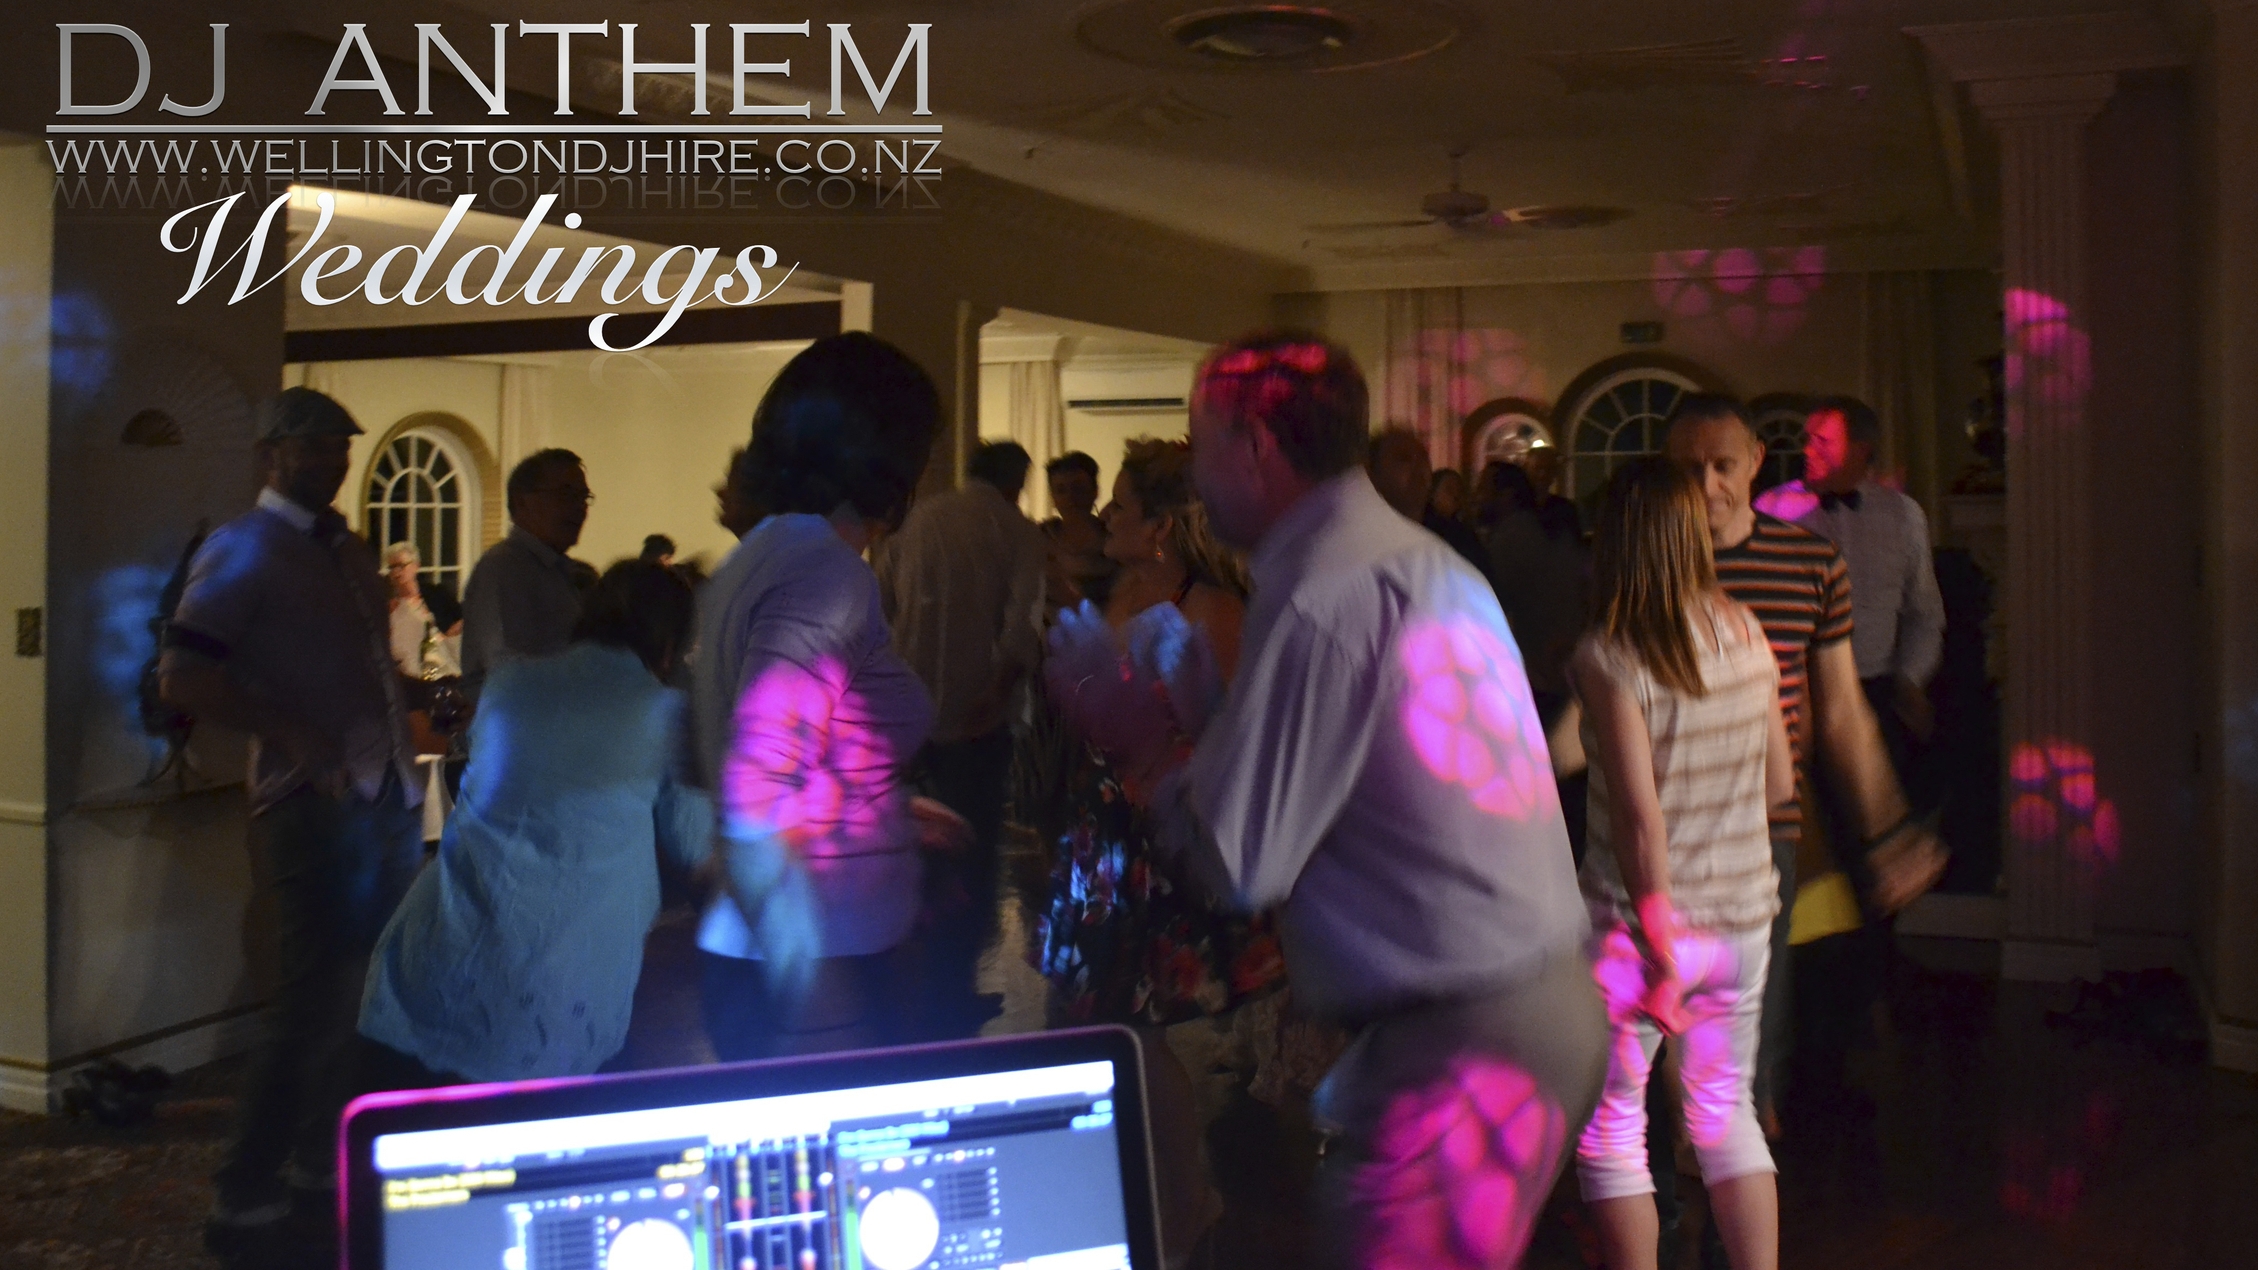 Dancing at wellington wedding with DJ Anthem.jpg